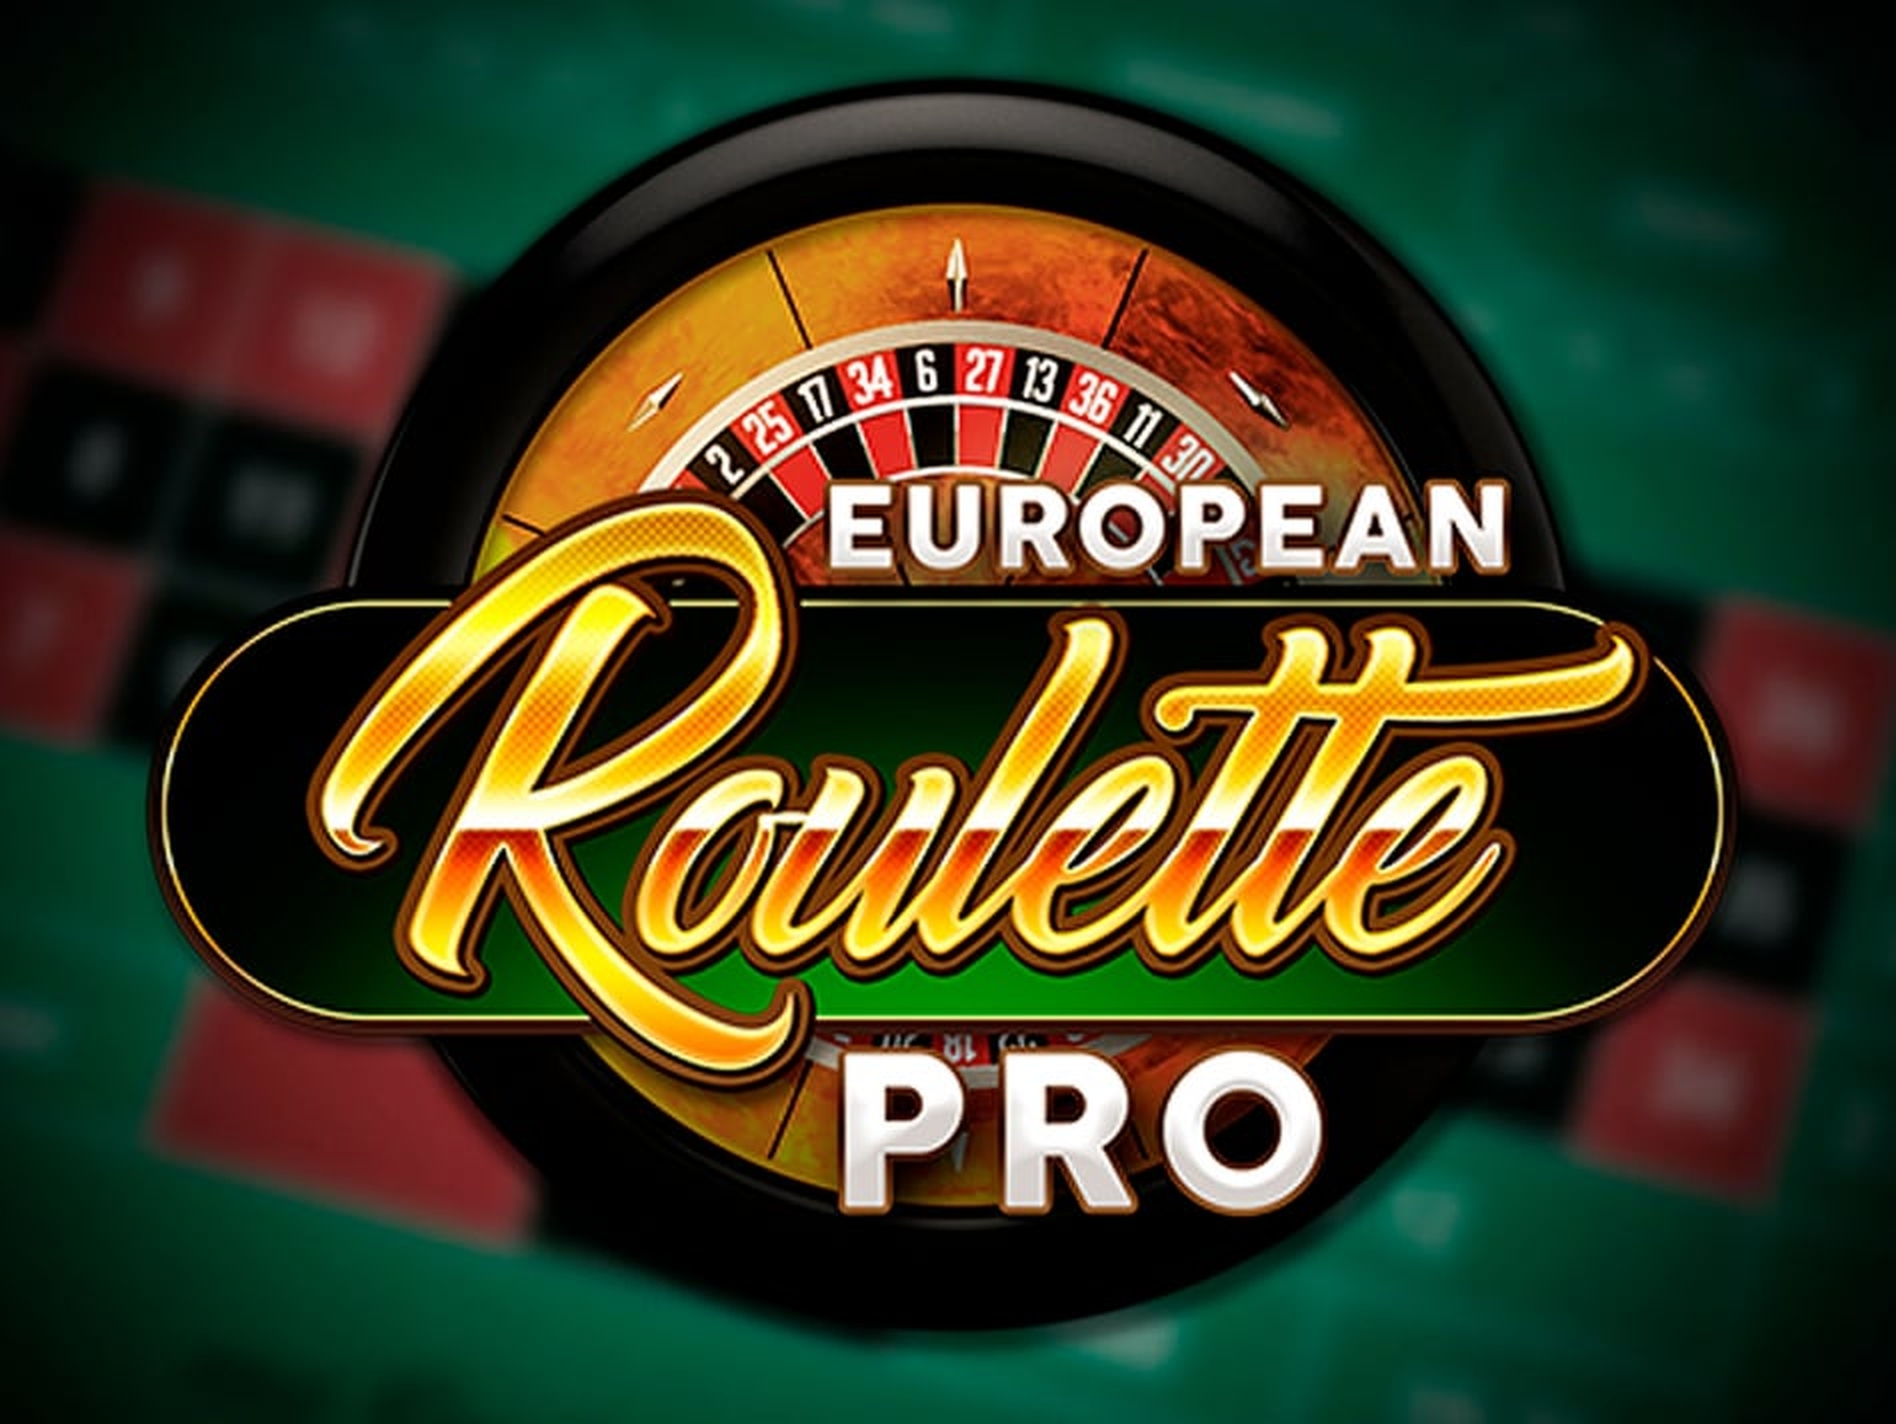 European Roulette demo